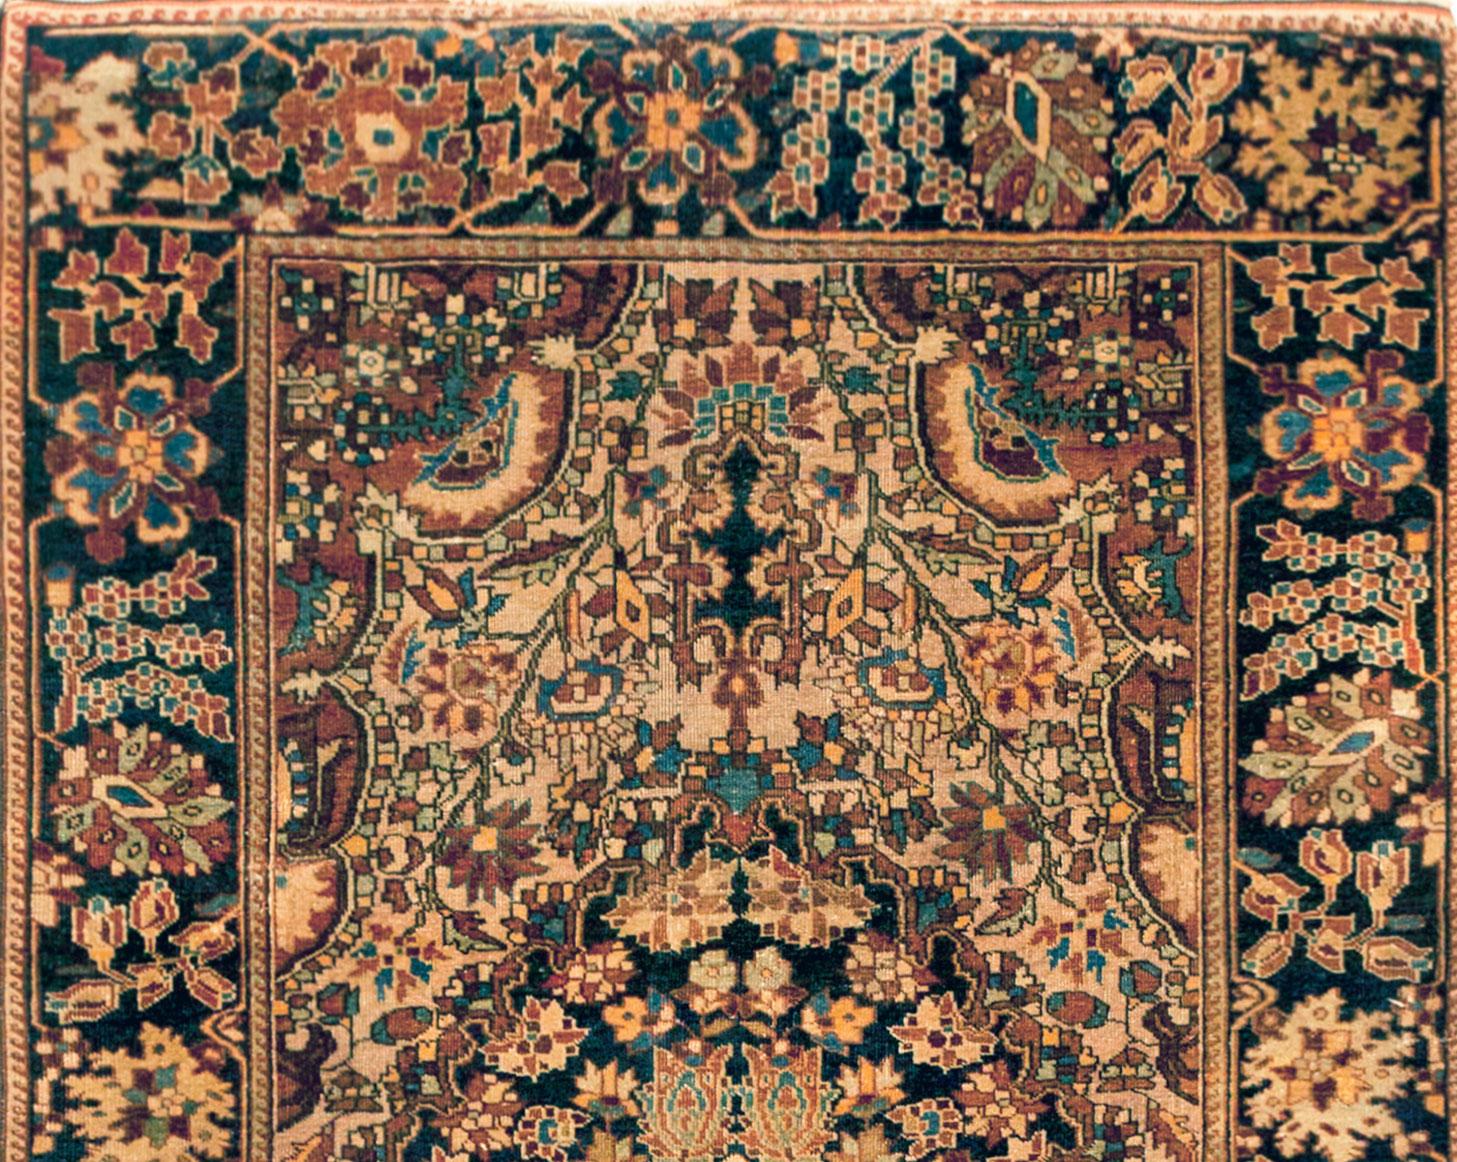 Antique Ferahan Sarouk oriental rug, circa 1900, small size

An antique Ferahan Sarouk oriental rug, size 4'9